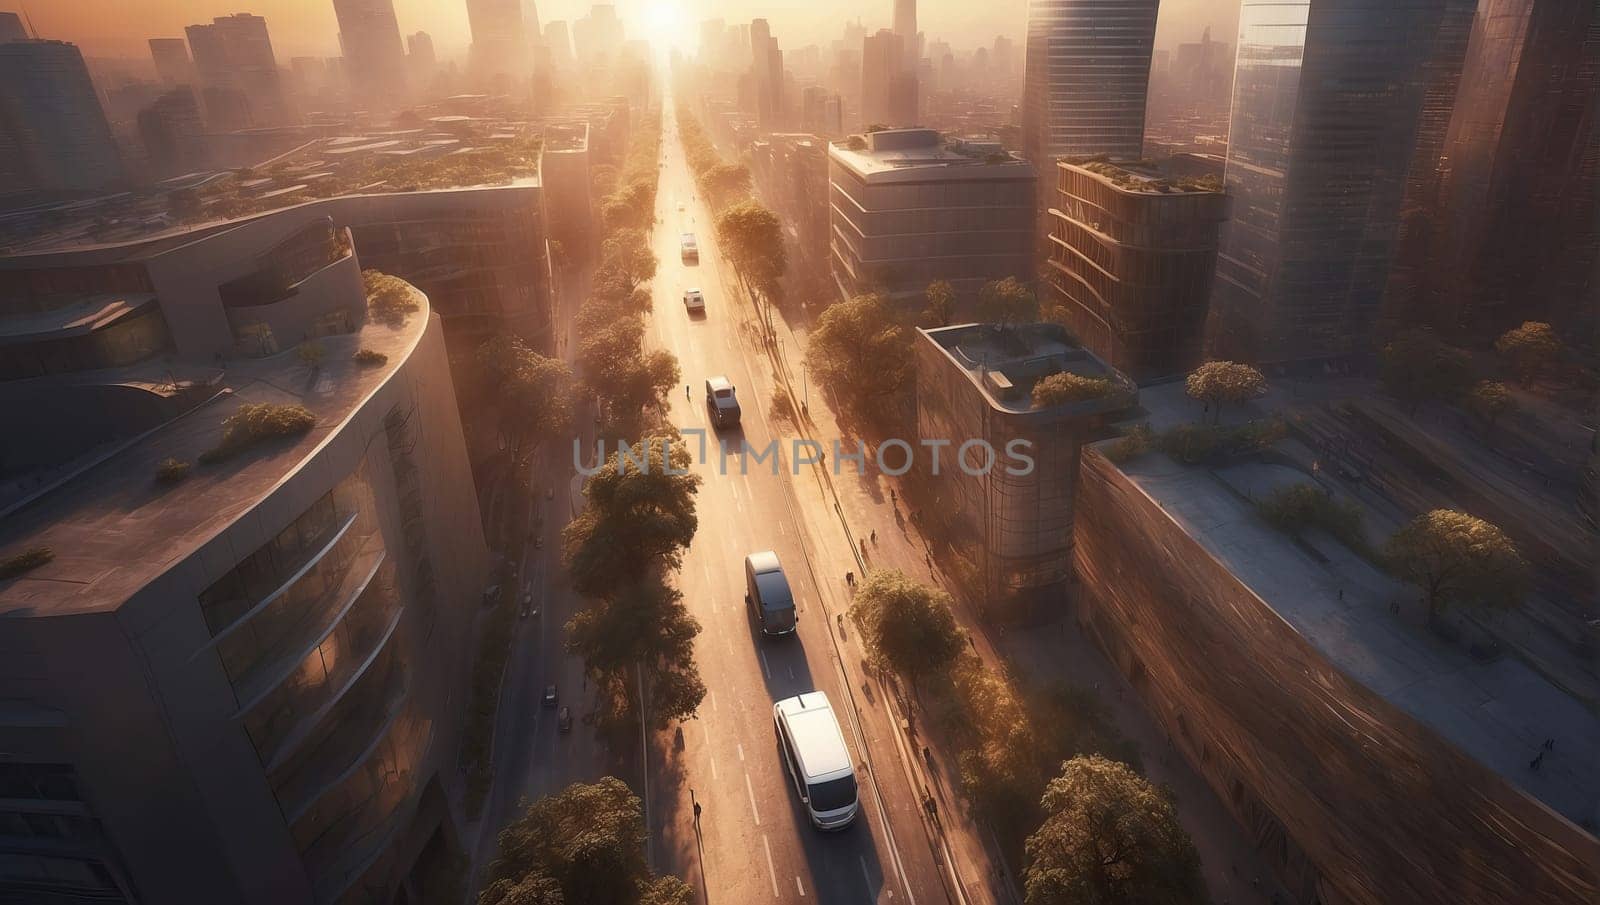 Sunrise over the metropolis by applesstock